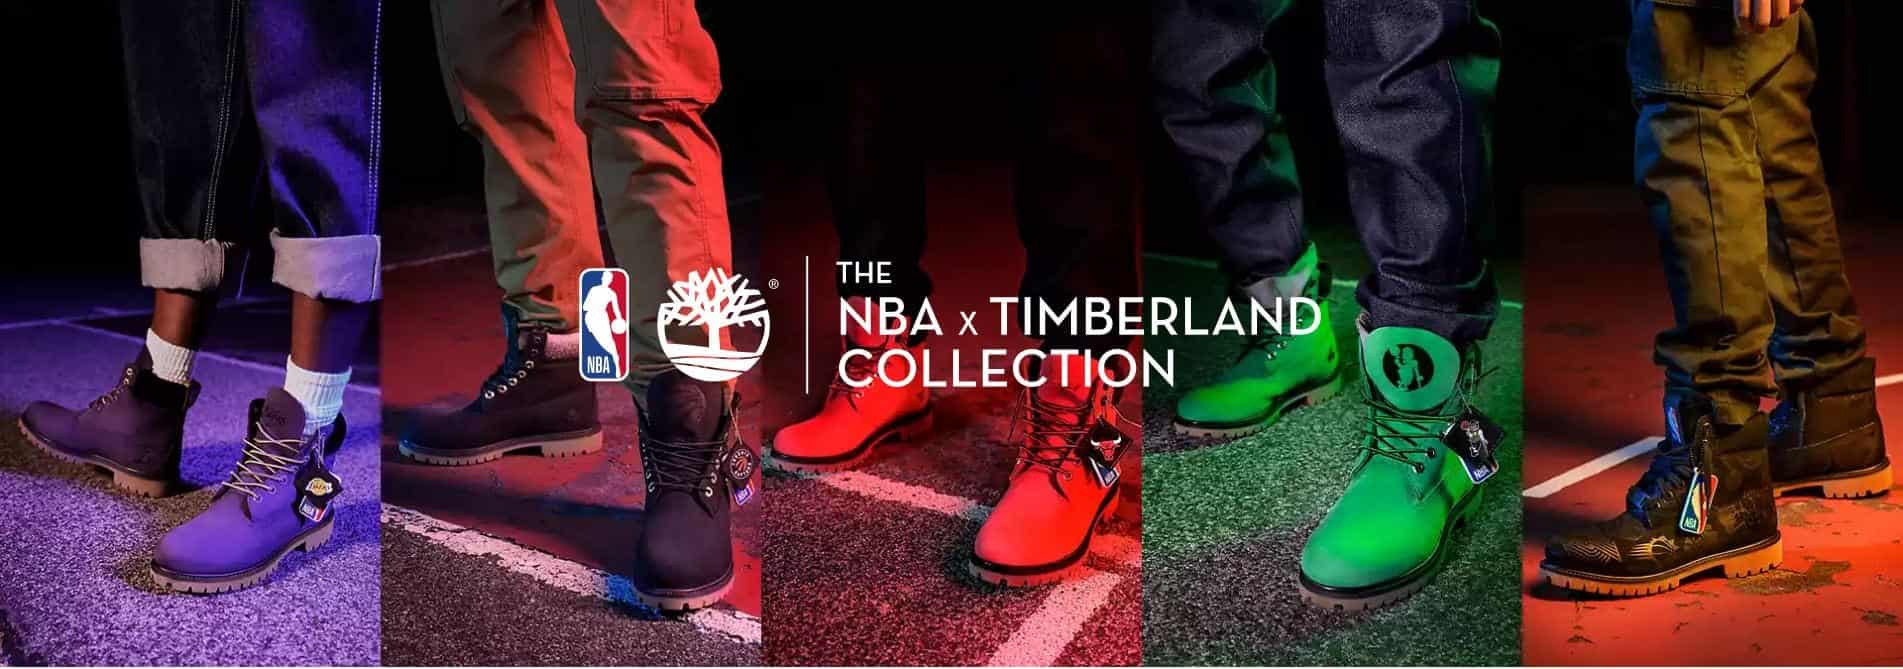 Timberland x NBA